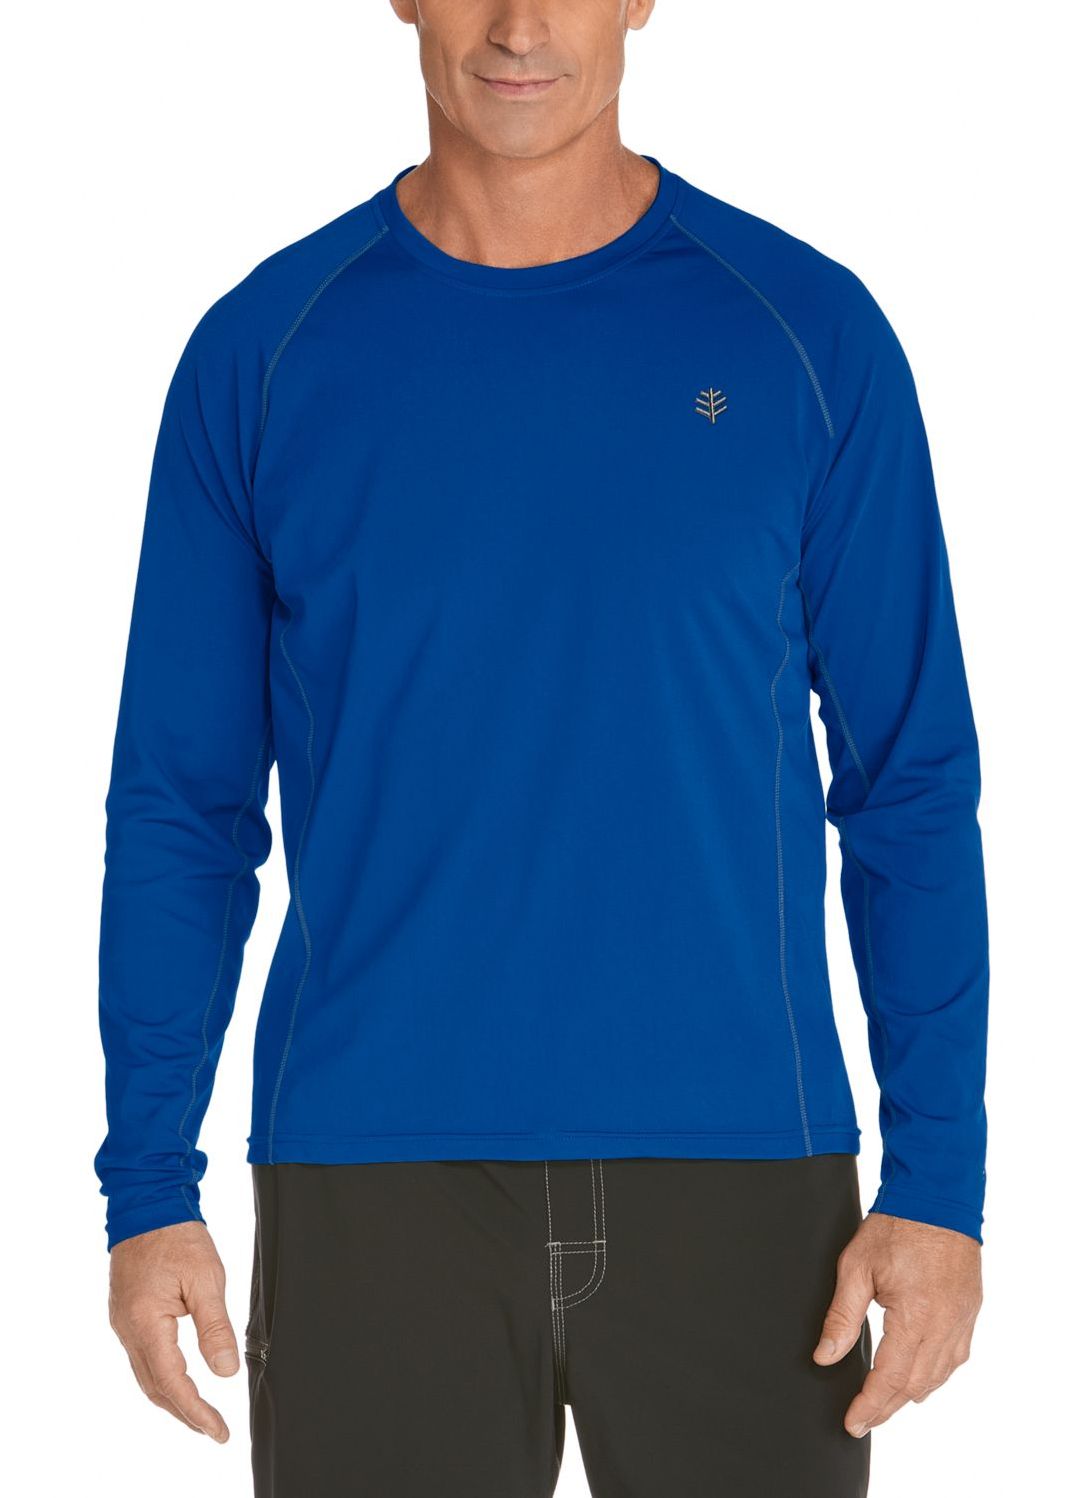 Coolibar - UV Schutz Langarm Shirt Herren - blau